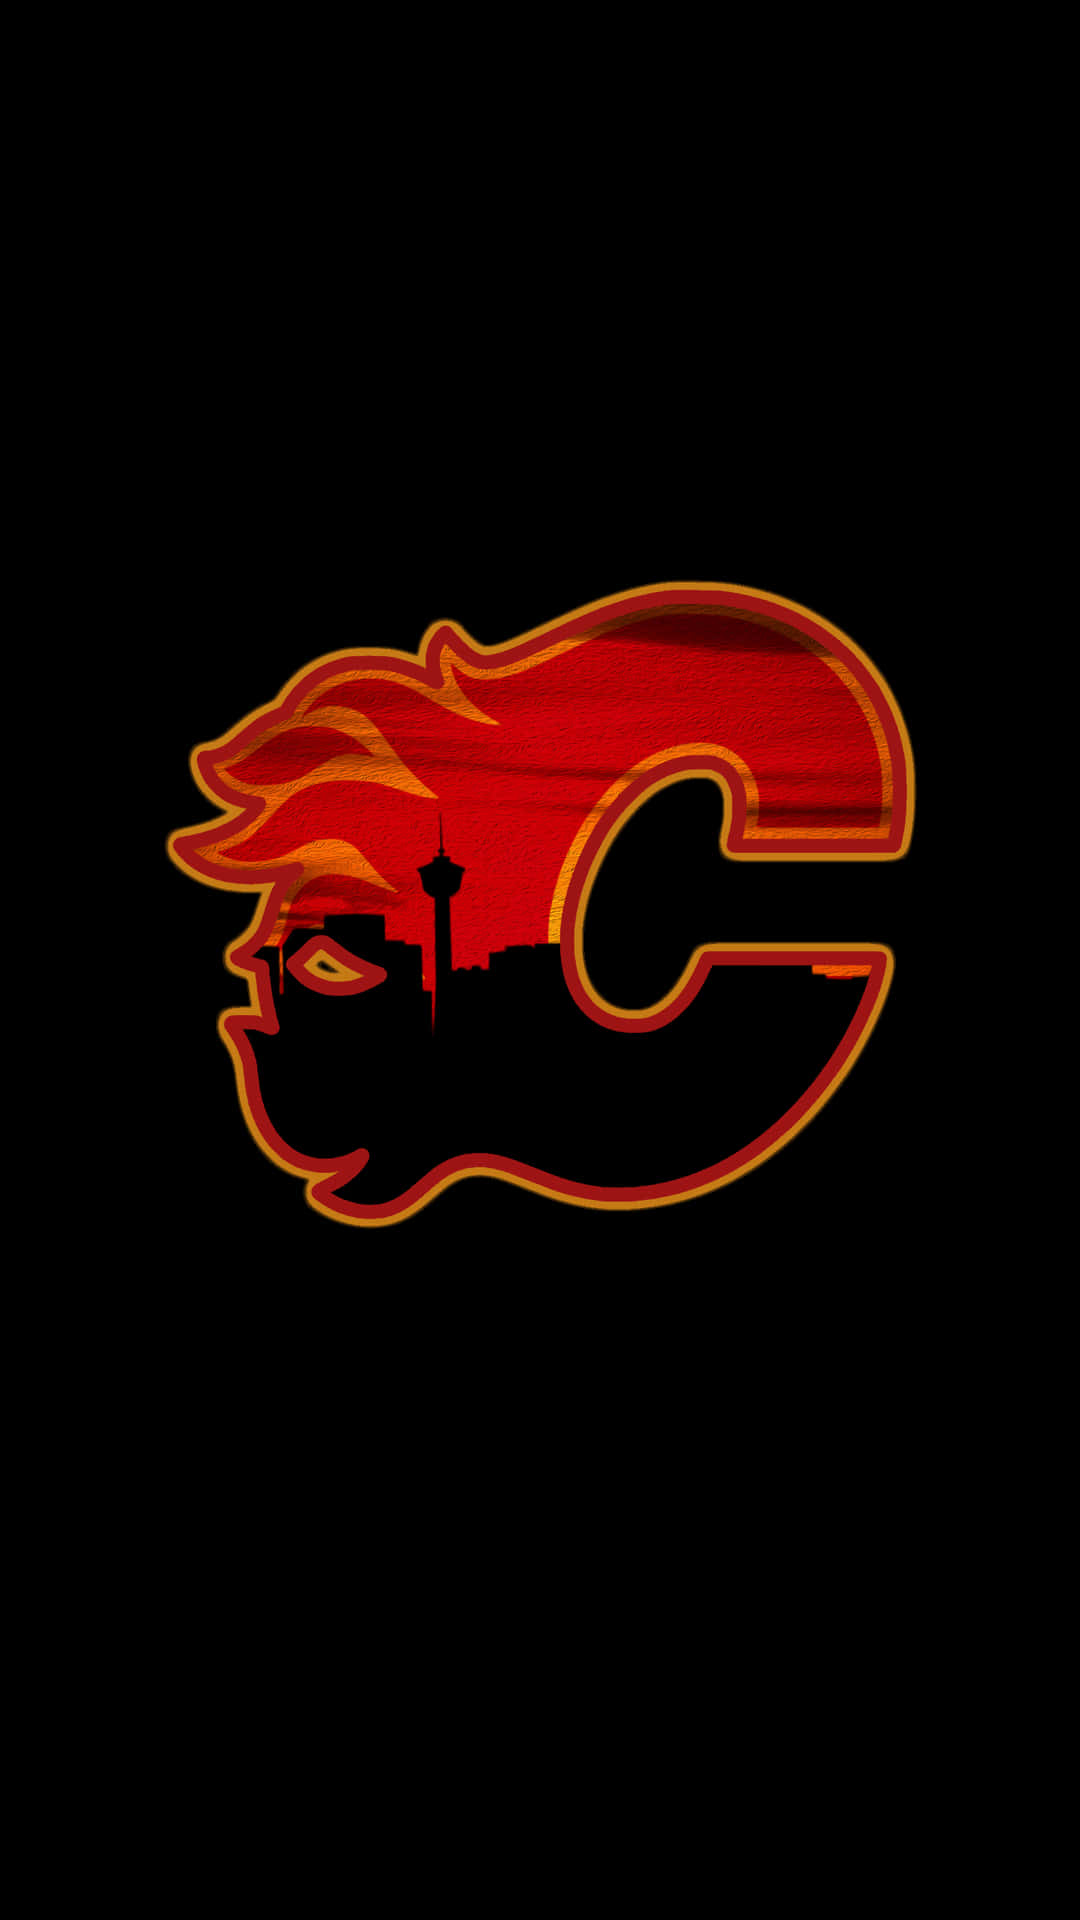 Unlogo Dei Calgary Flames Su Sfondo Nero